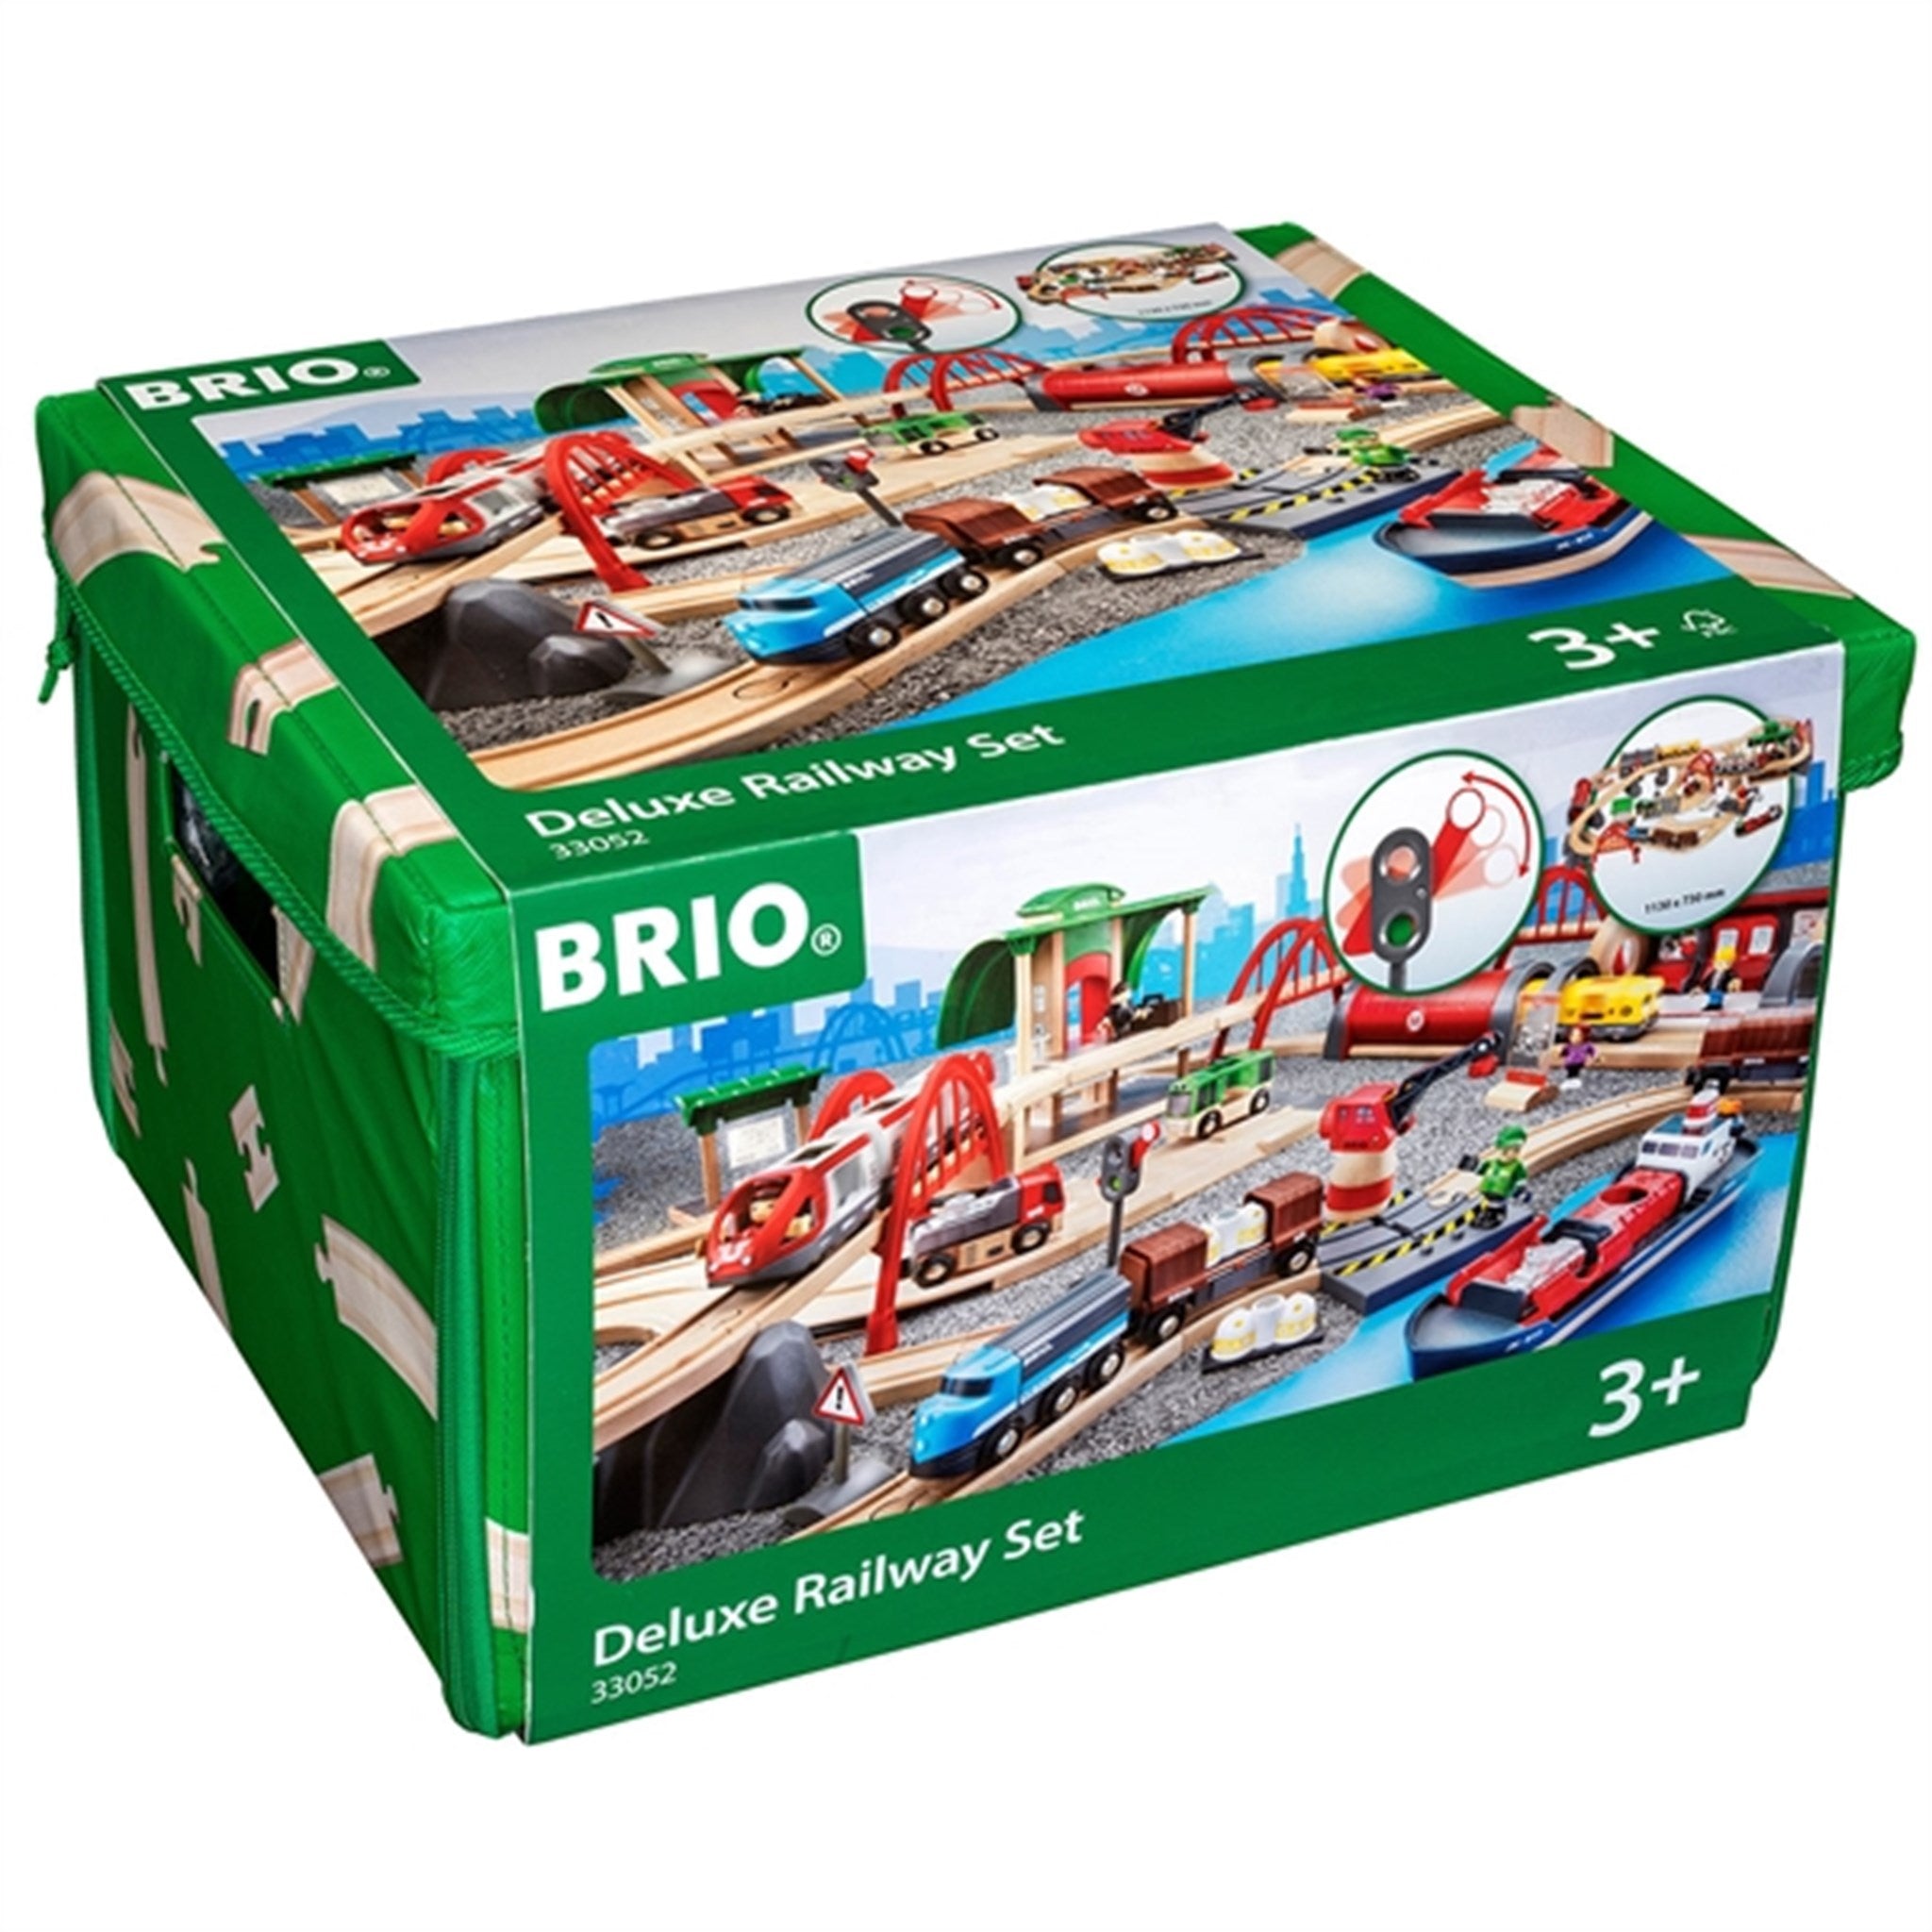 BRIO® Deluxe Railway Set 2